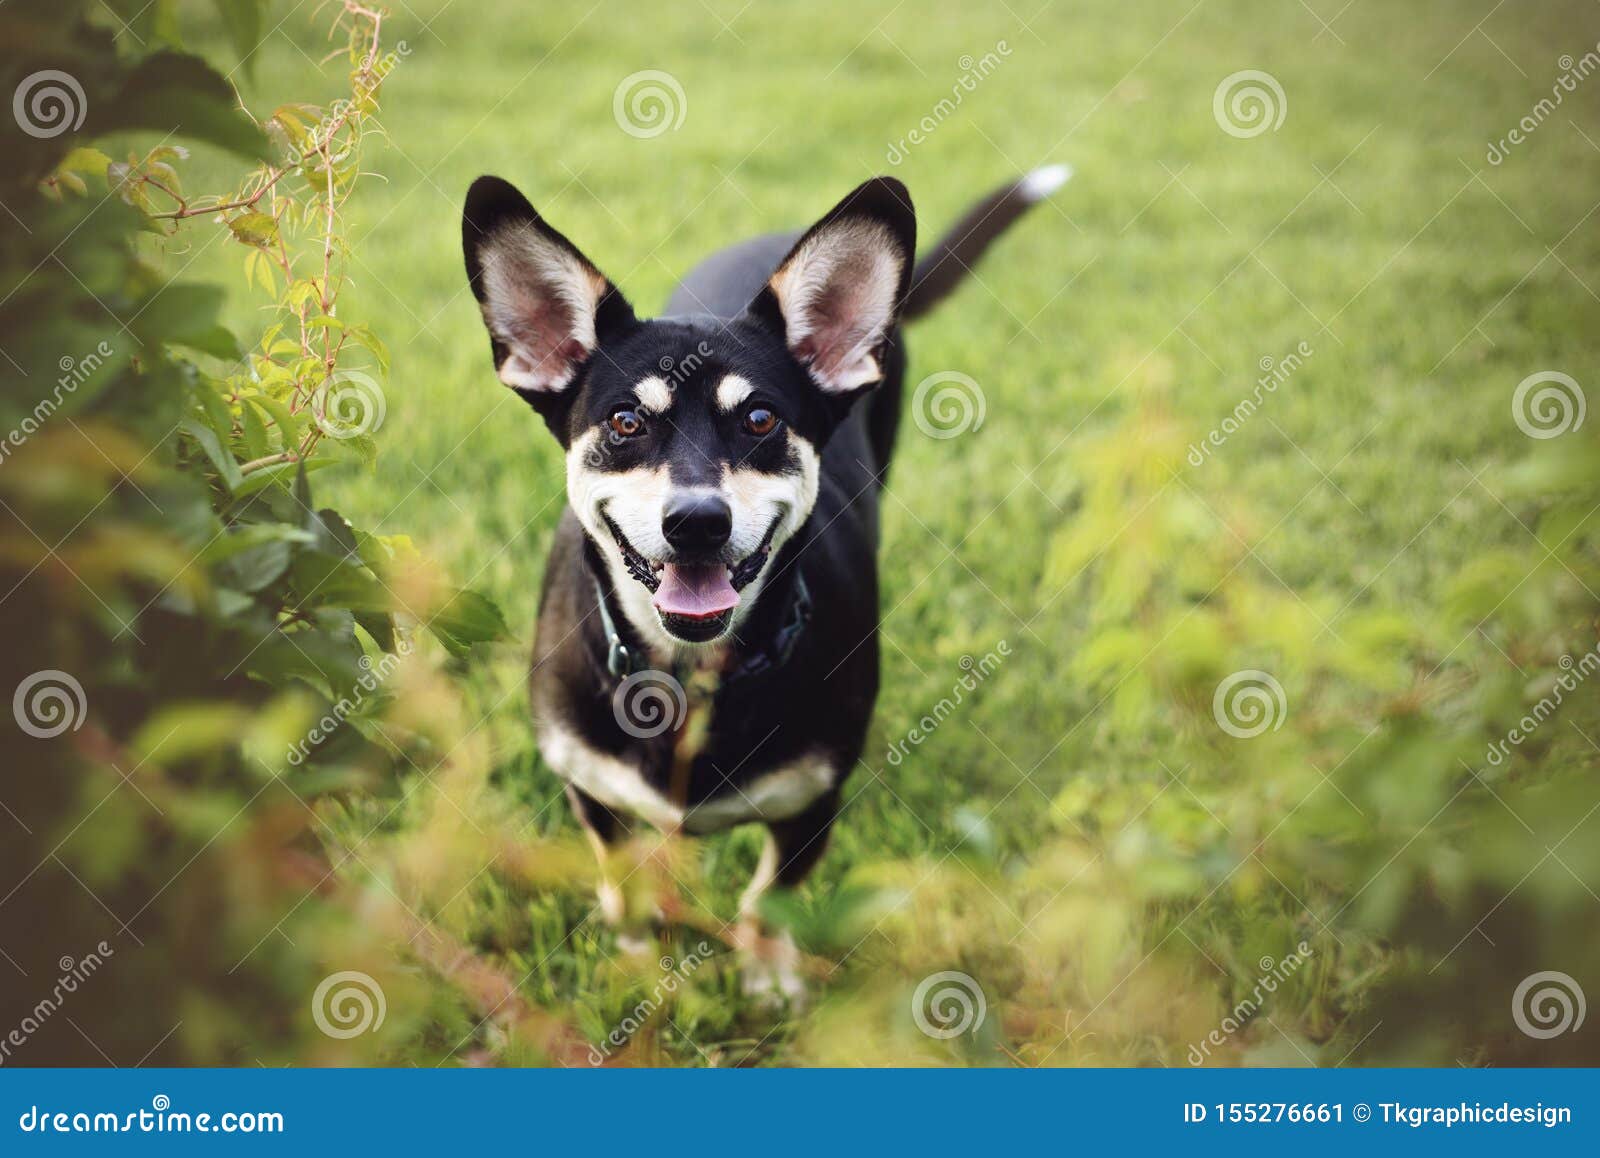 261 Siberian Husky Chihuahua Photos Free Royalty Free Stock Photos From Dreamstime